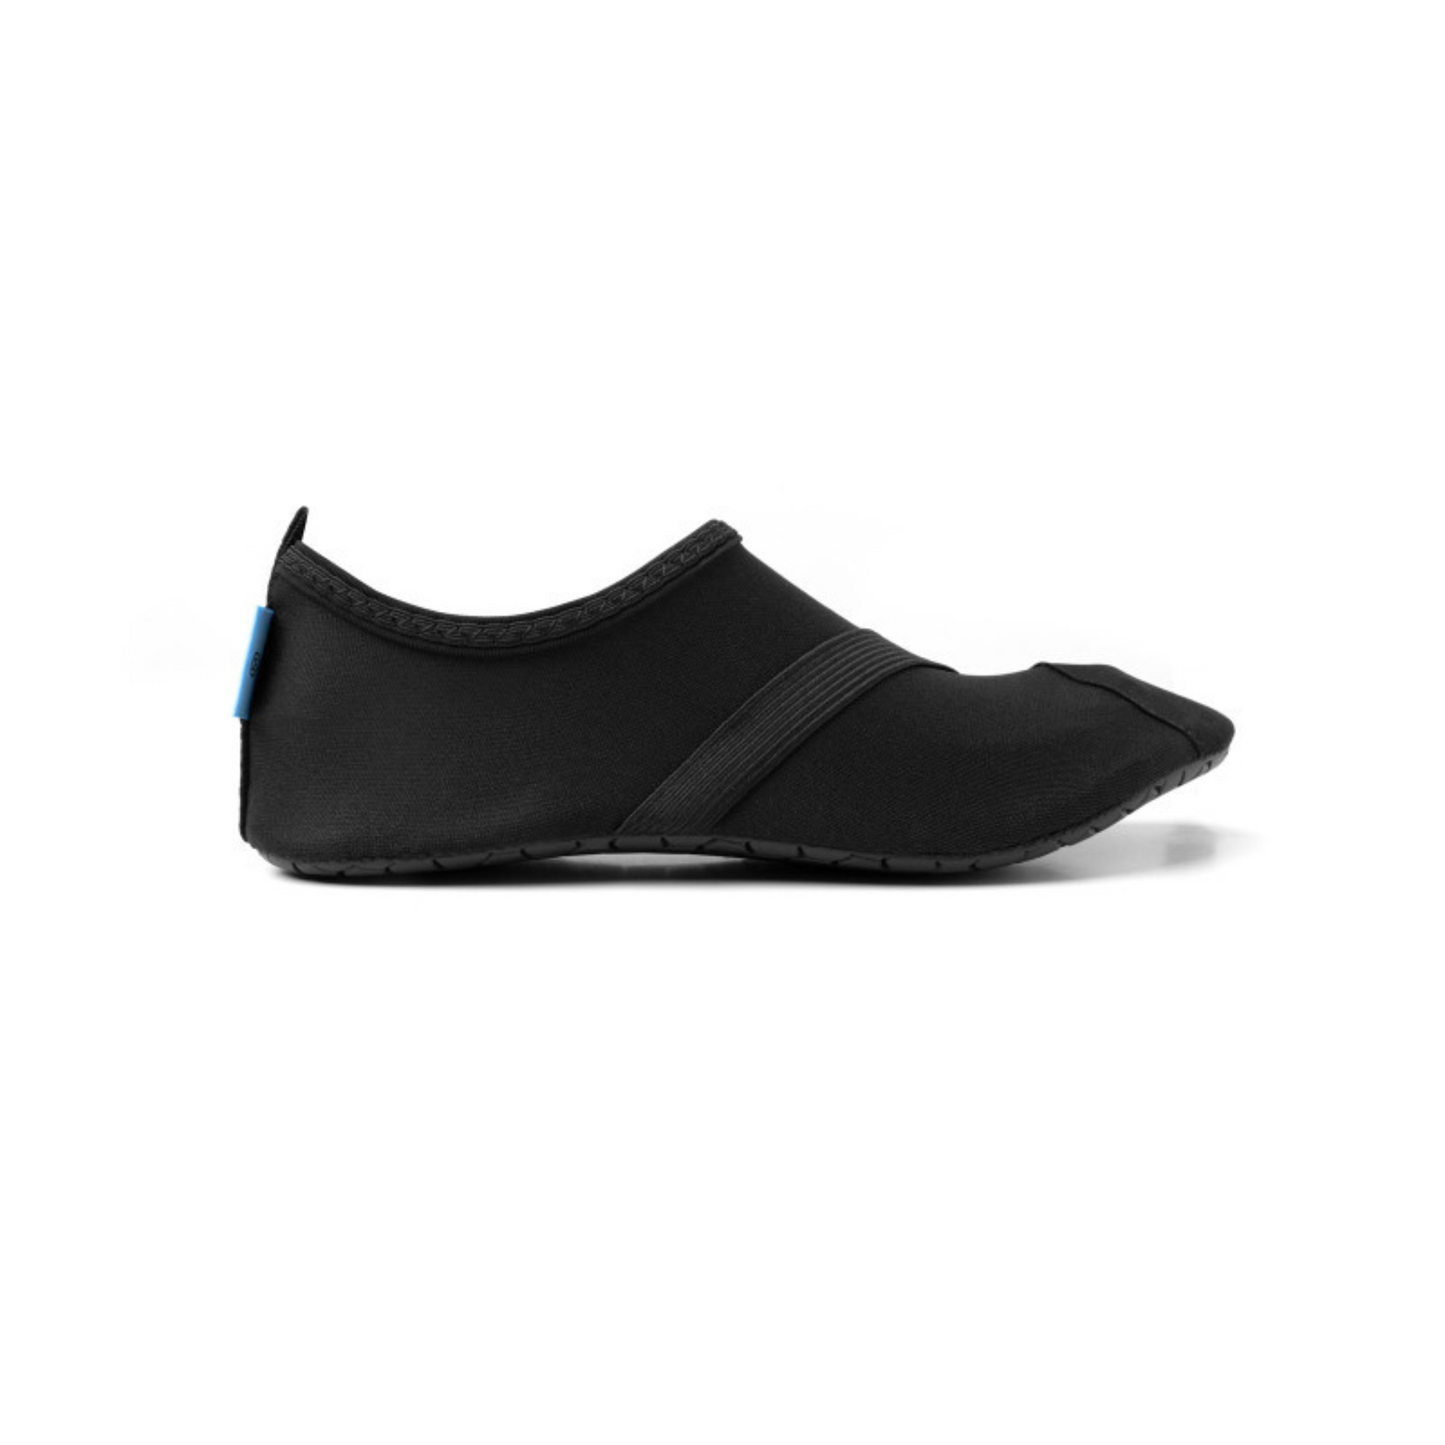 fit kicks activewear mens shoe in black